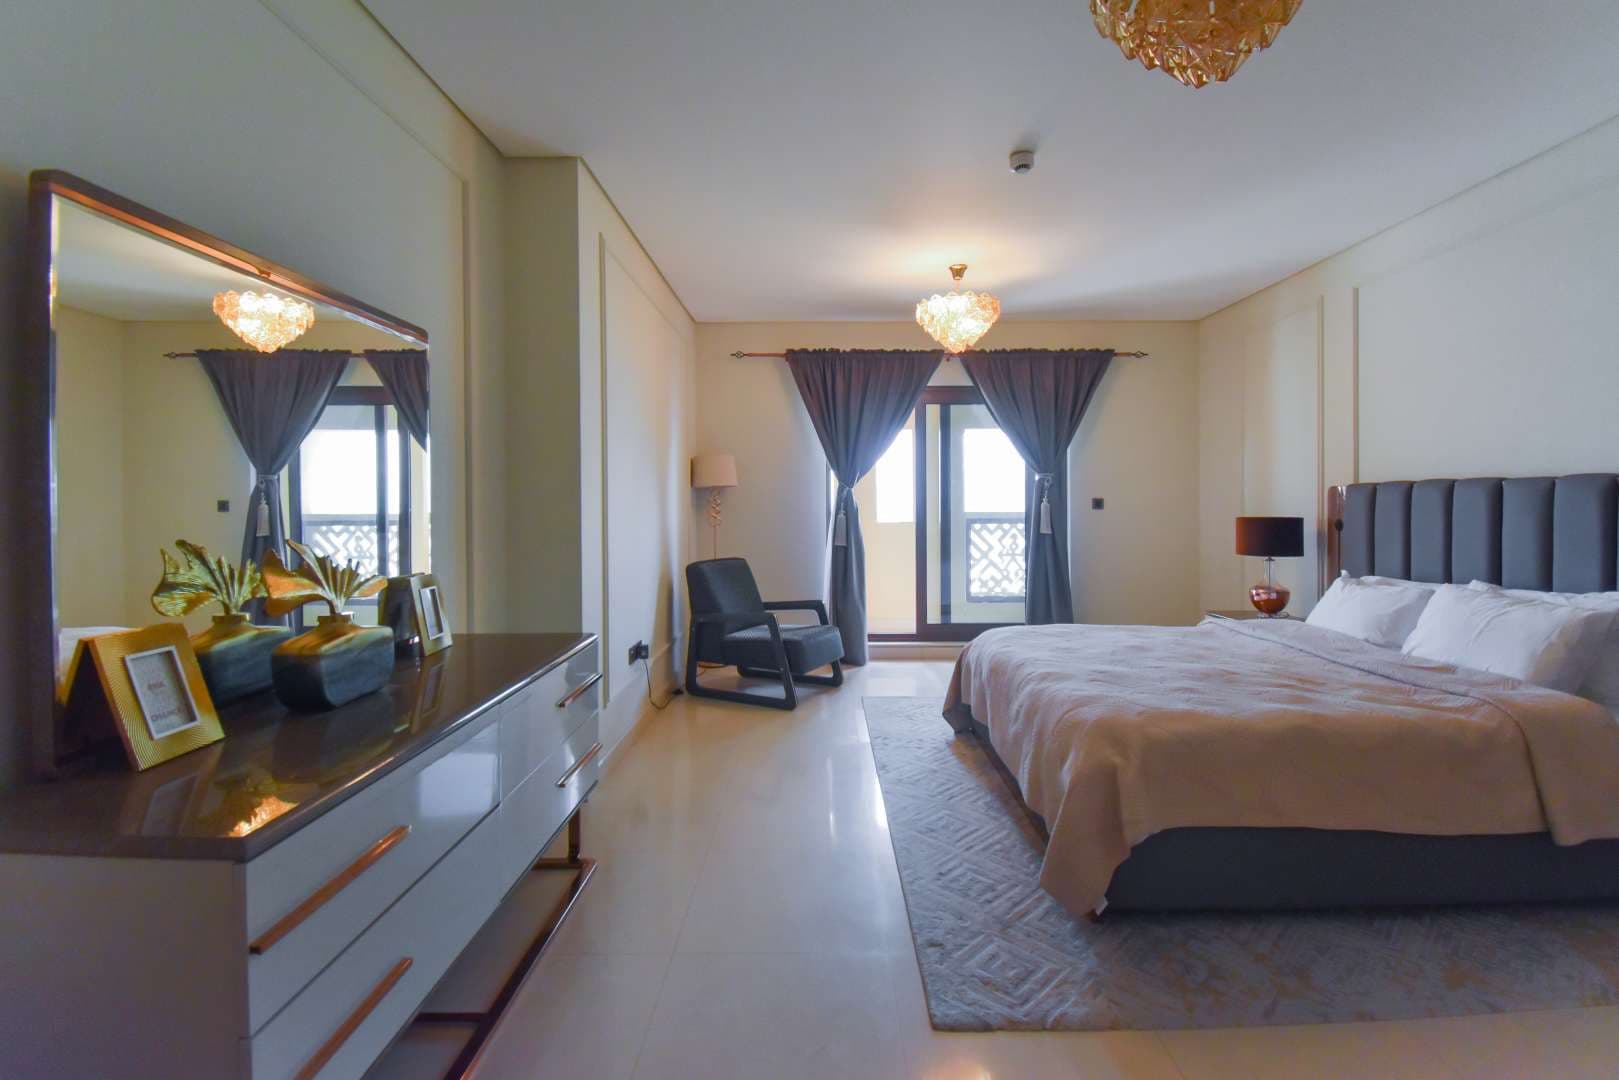 4 Bedroom Apartment For Sale Kingdom Of Sheba Lp10846 A8ab0f700839000.jpg